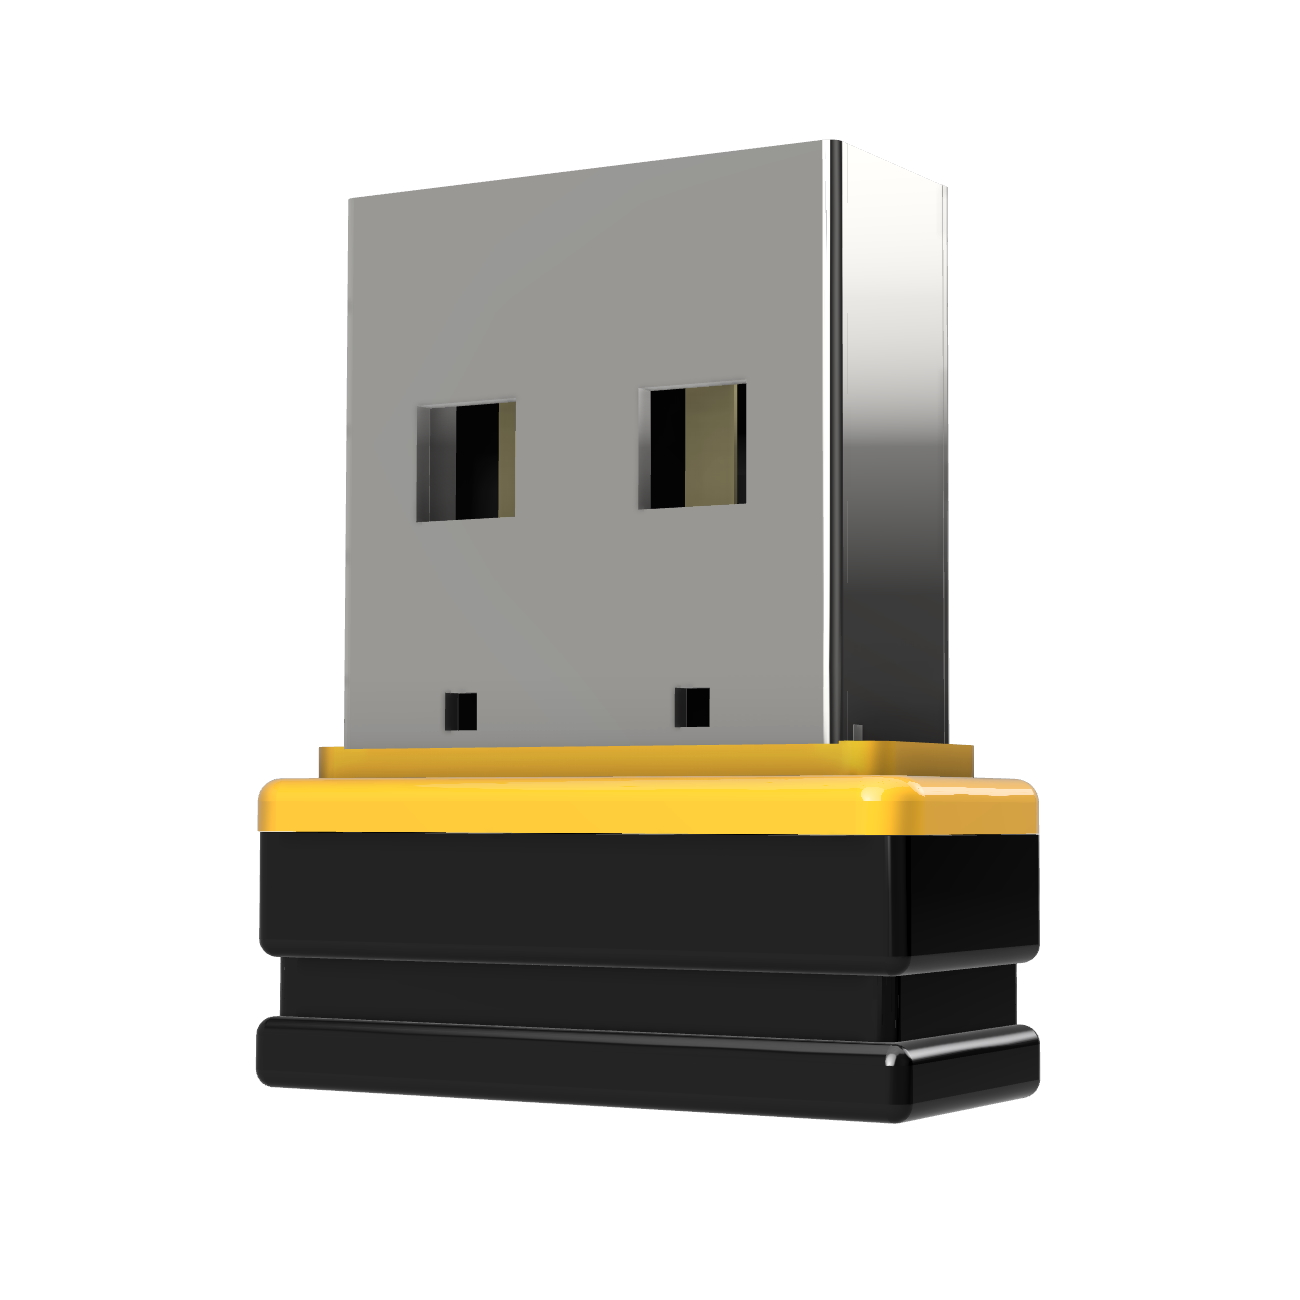 GB) Mini (Schwarz/Gelb, USB GERMANY USB-Stick 16 ®ULTRA P1